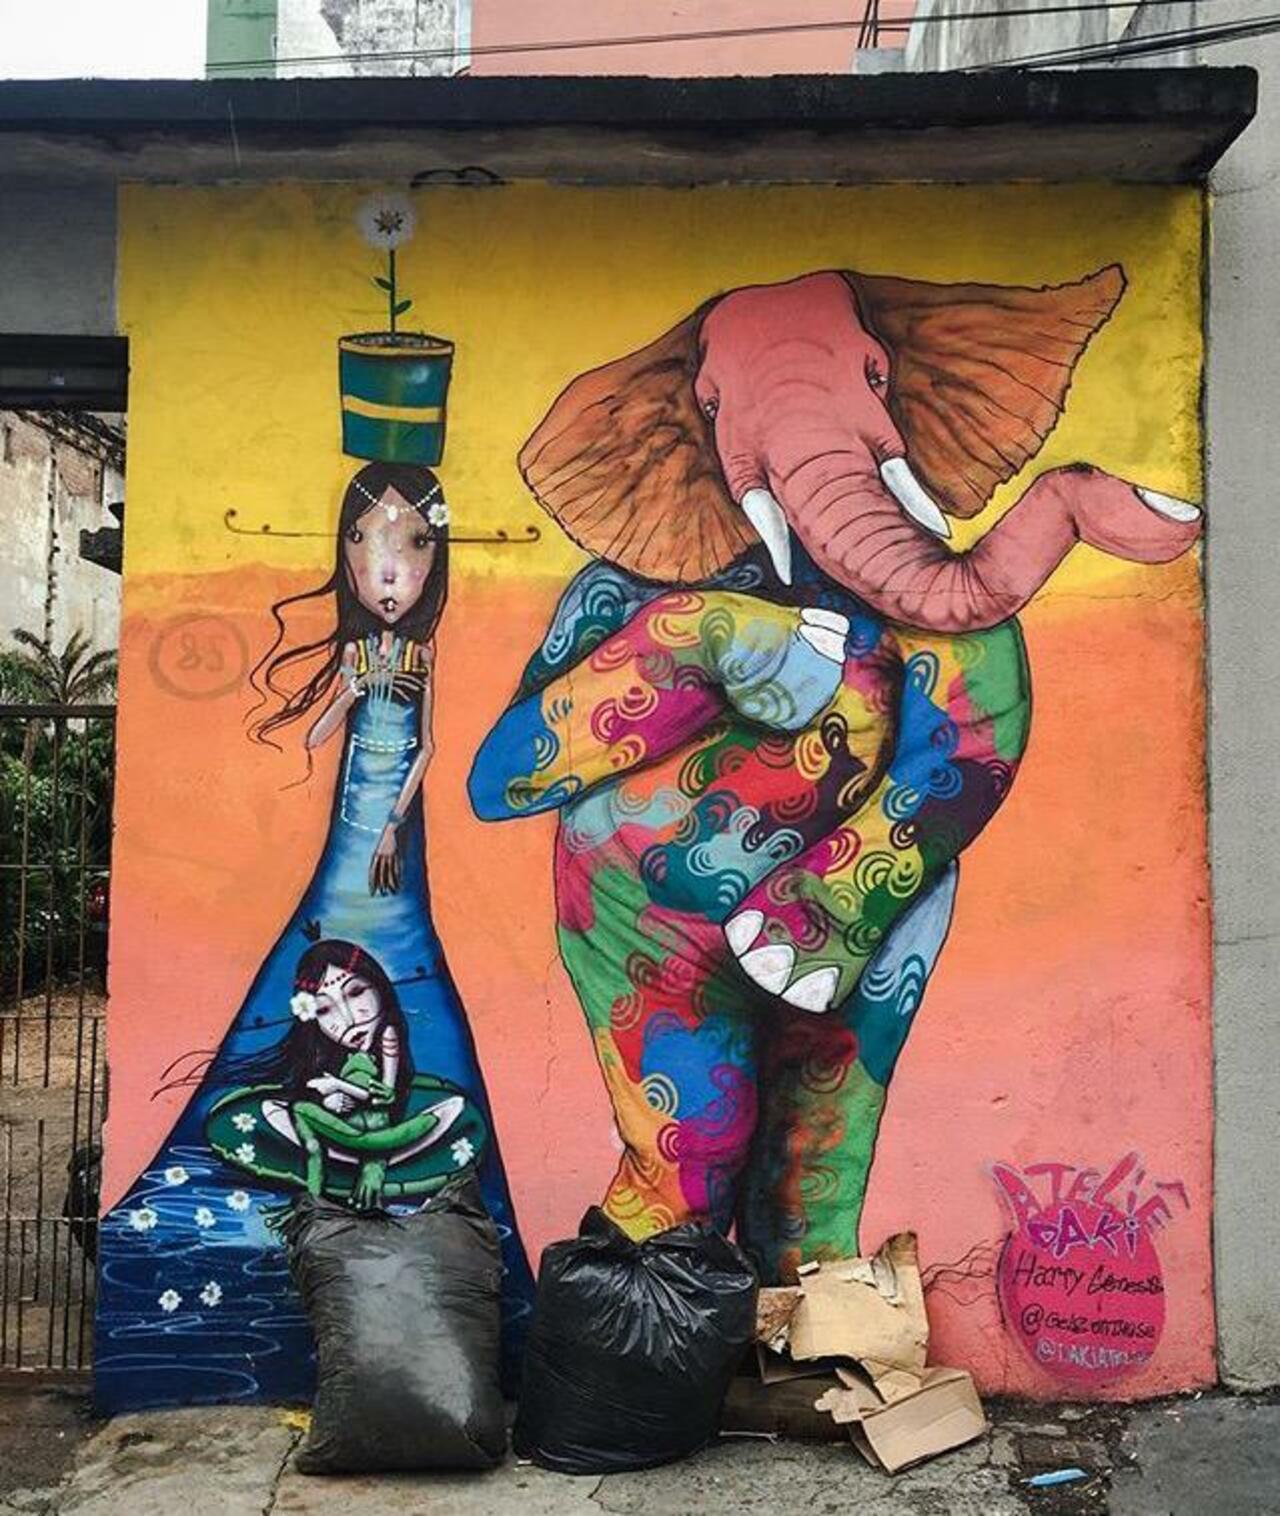 Street Art by Harry Geneis & Gelson in São Paulo 

#art #mural #graffiti #streetart http://t.co/dIwXQB5D9H